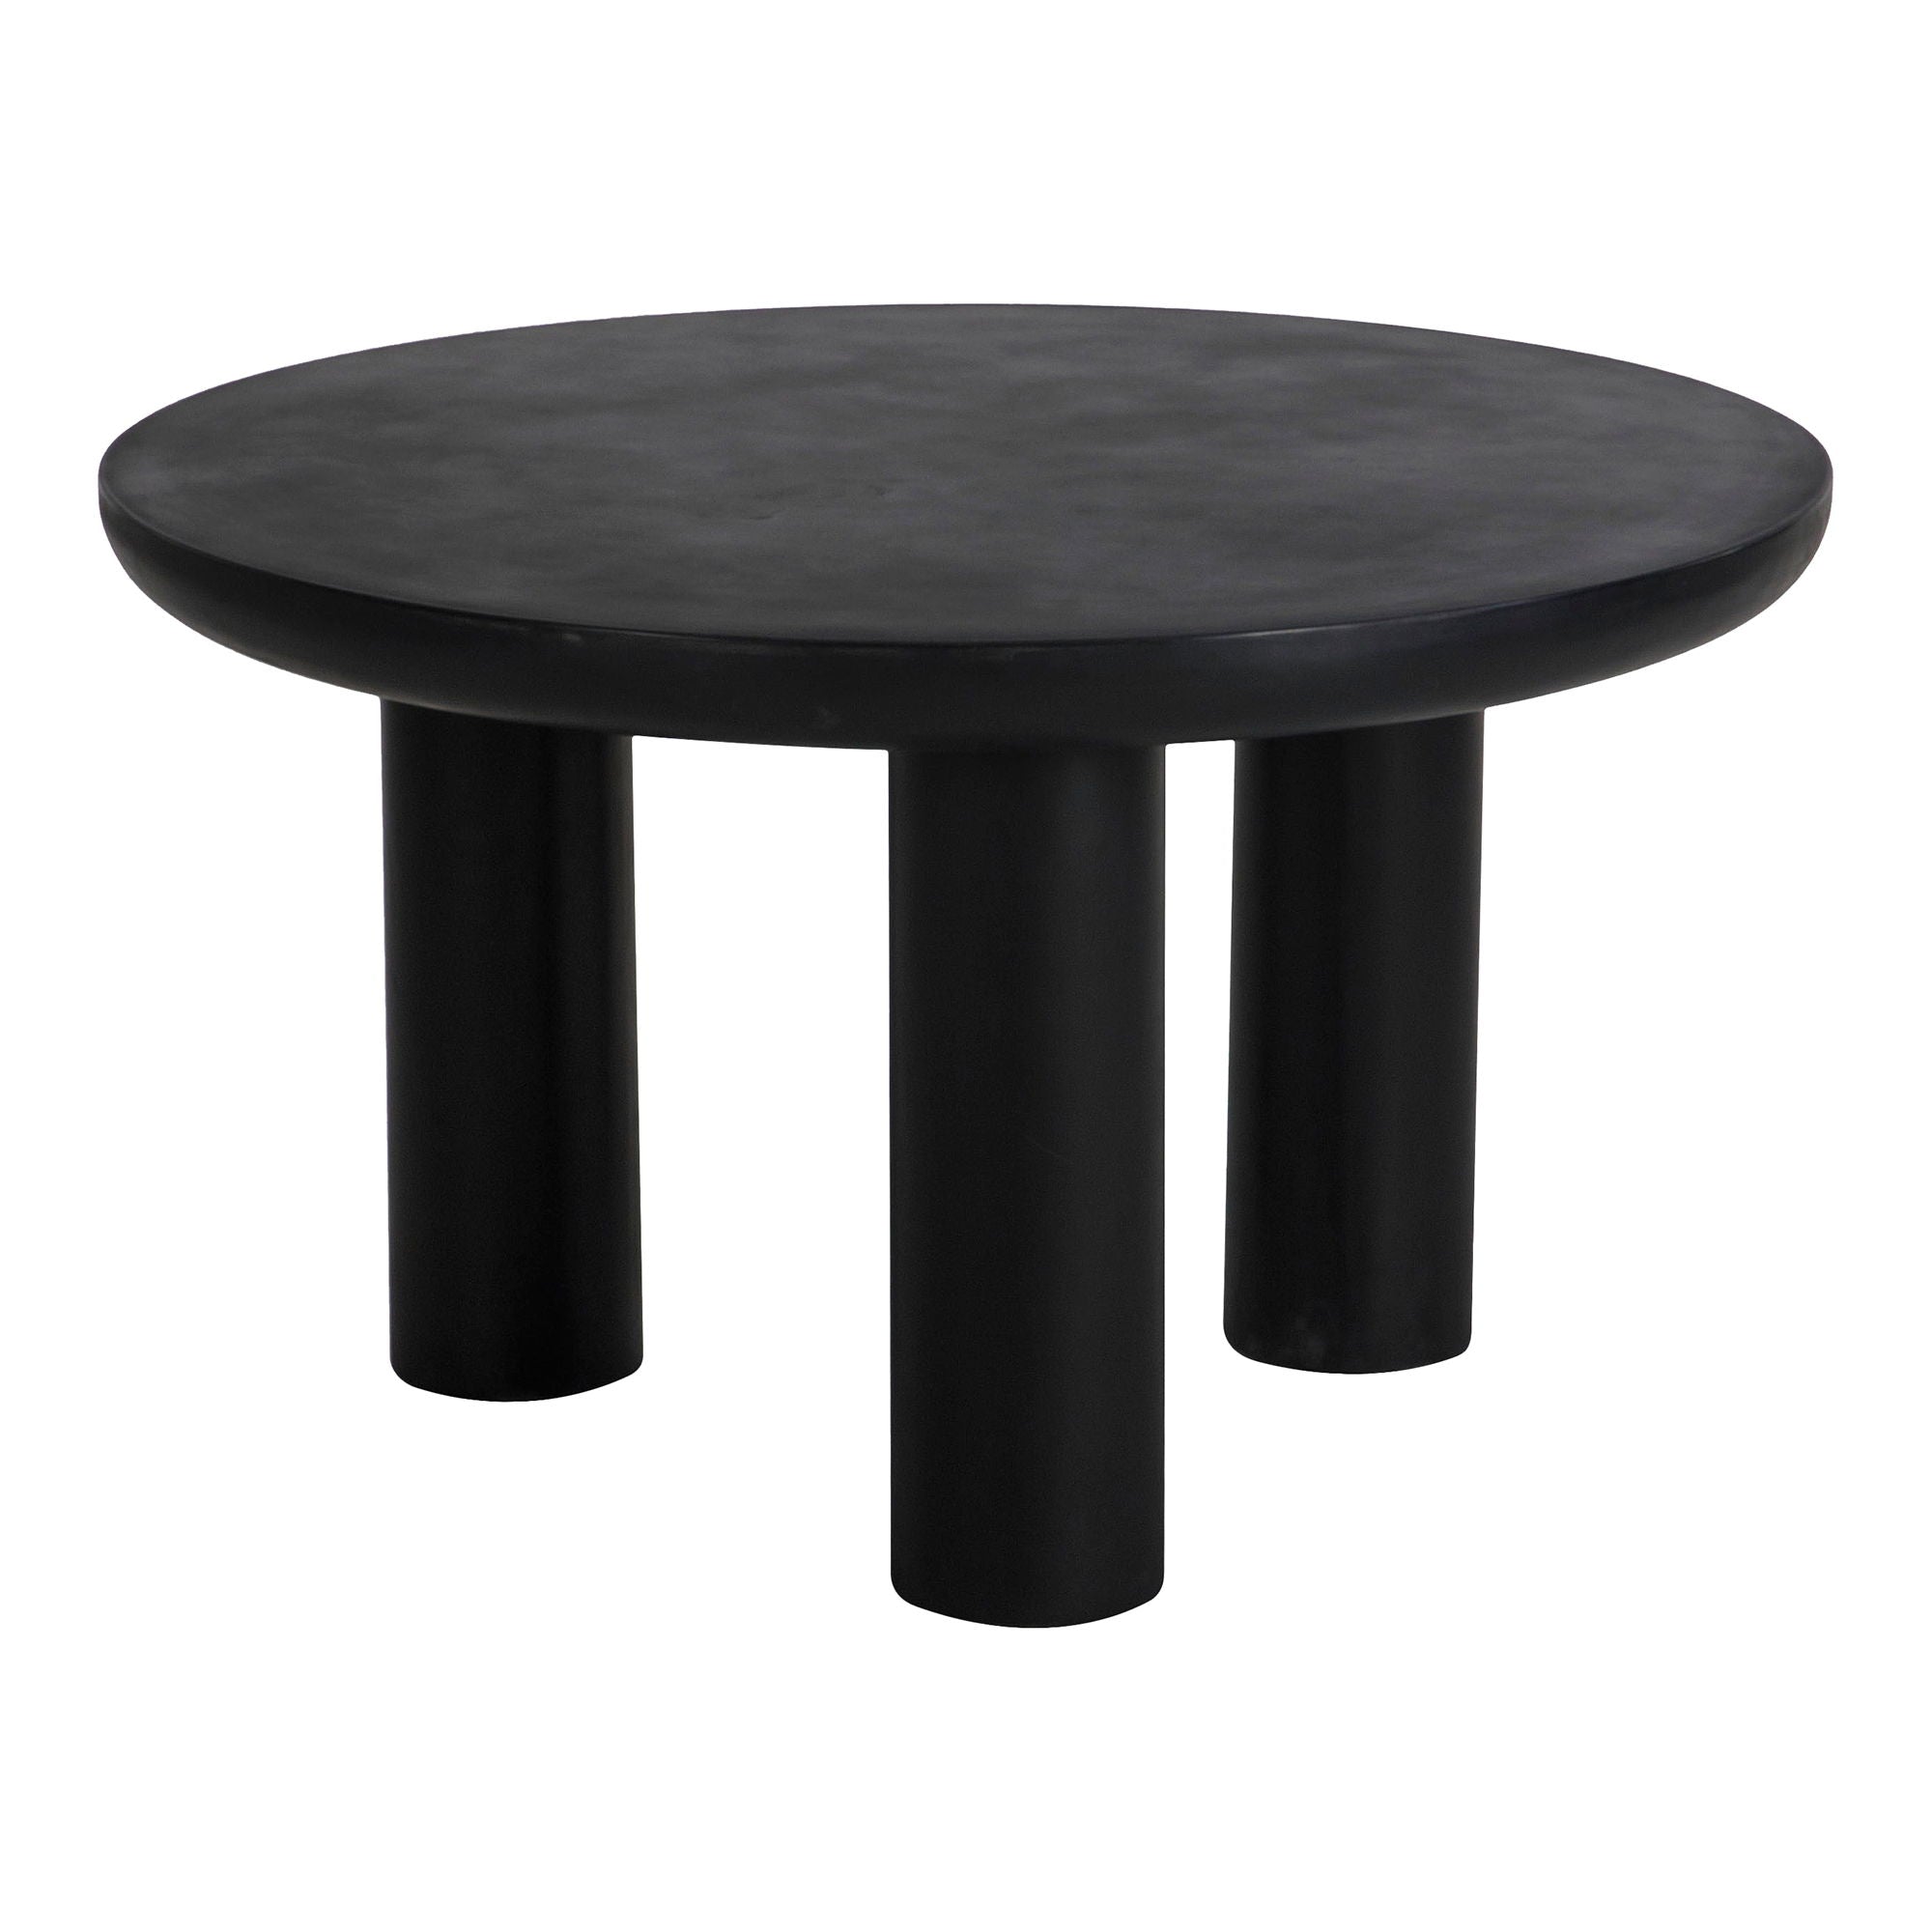 Rocca - Round Dining Table - Black - Concrete